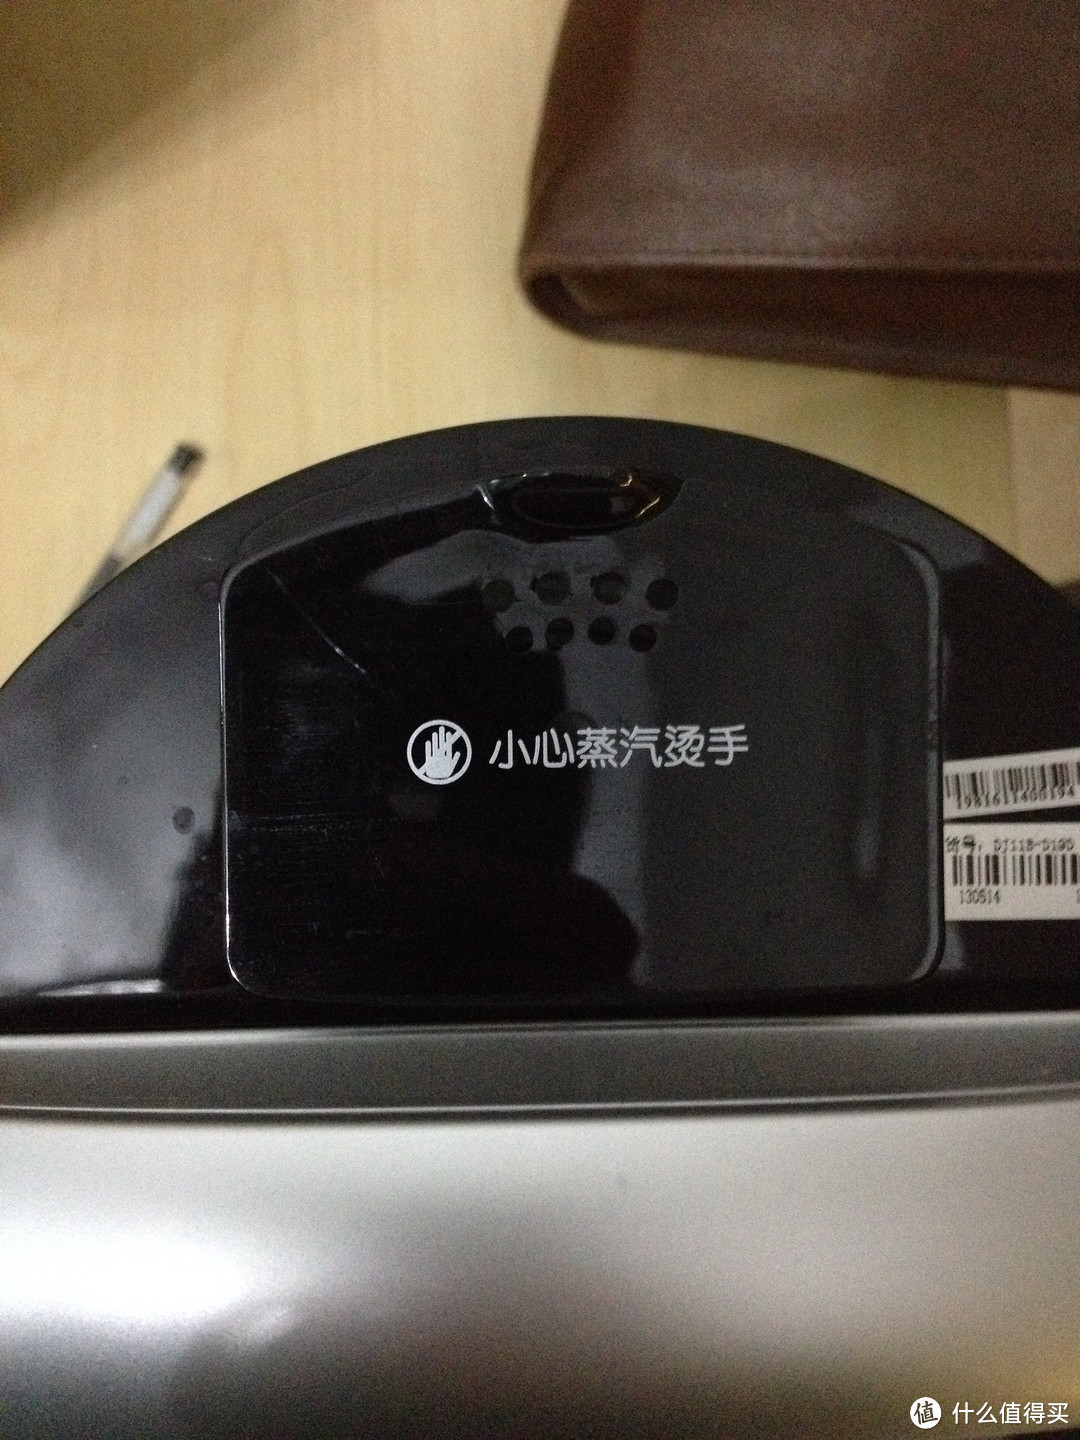 Joyoung 九阳 植物奶牛 智能预约系列 DJ11B-D19D 豆浆机，每天早上多睡一小时